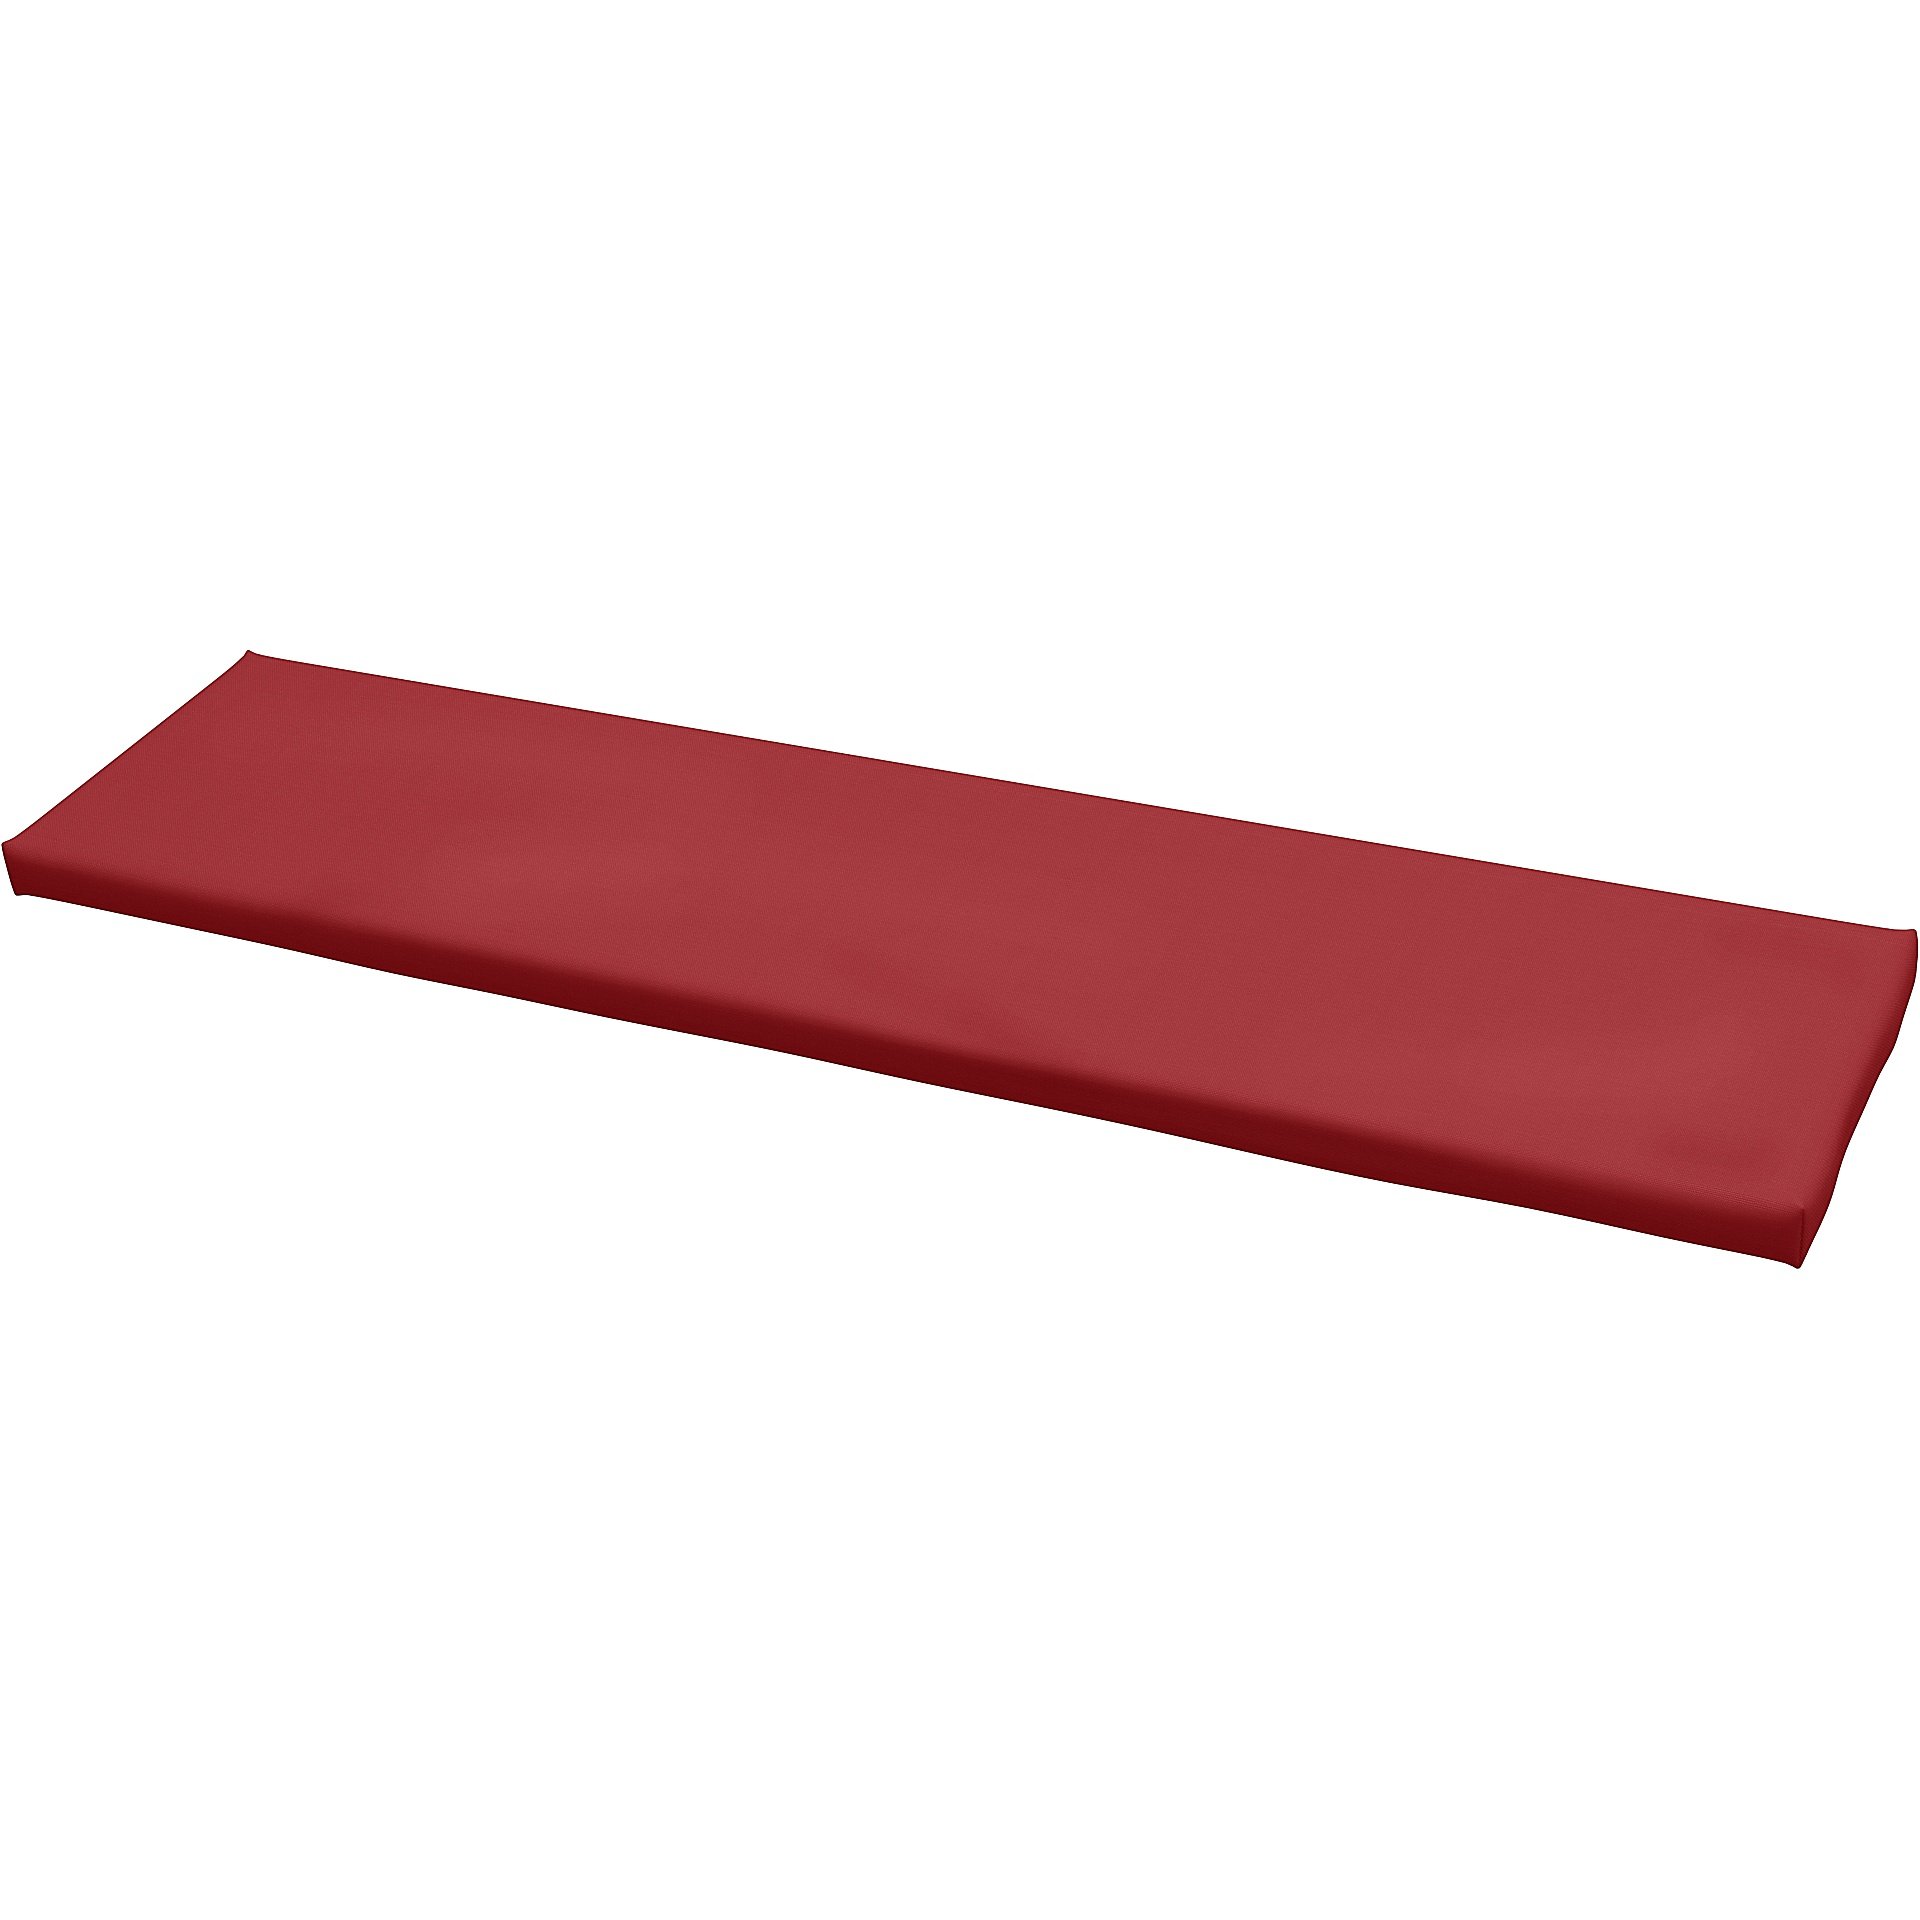 IKEA - Universal bench cushion cover 140x35x3,5 cm, Scarlet Red, Cotton - Bemz